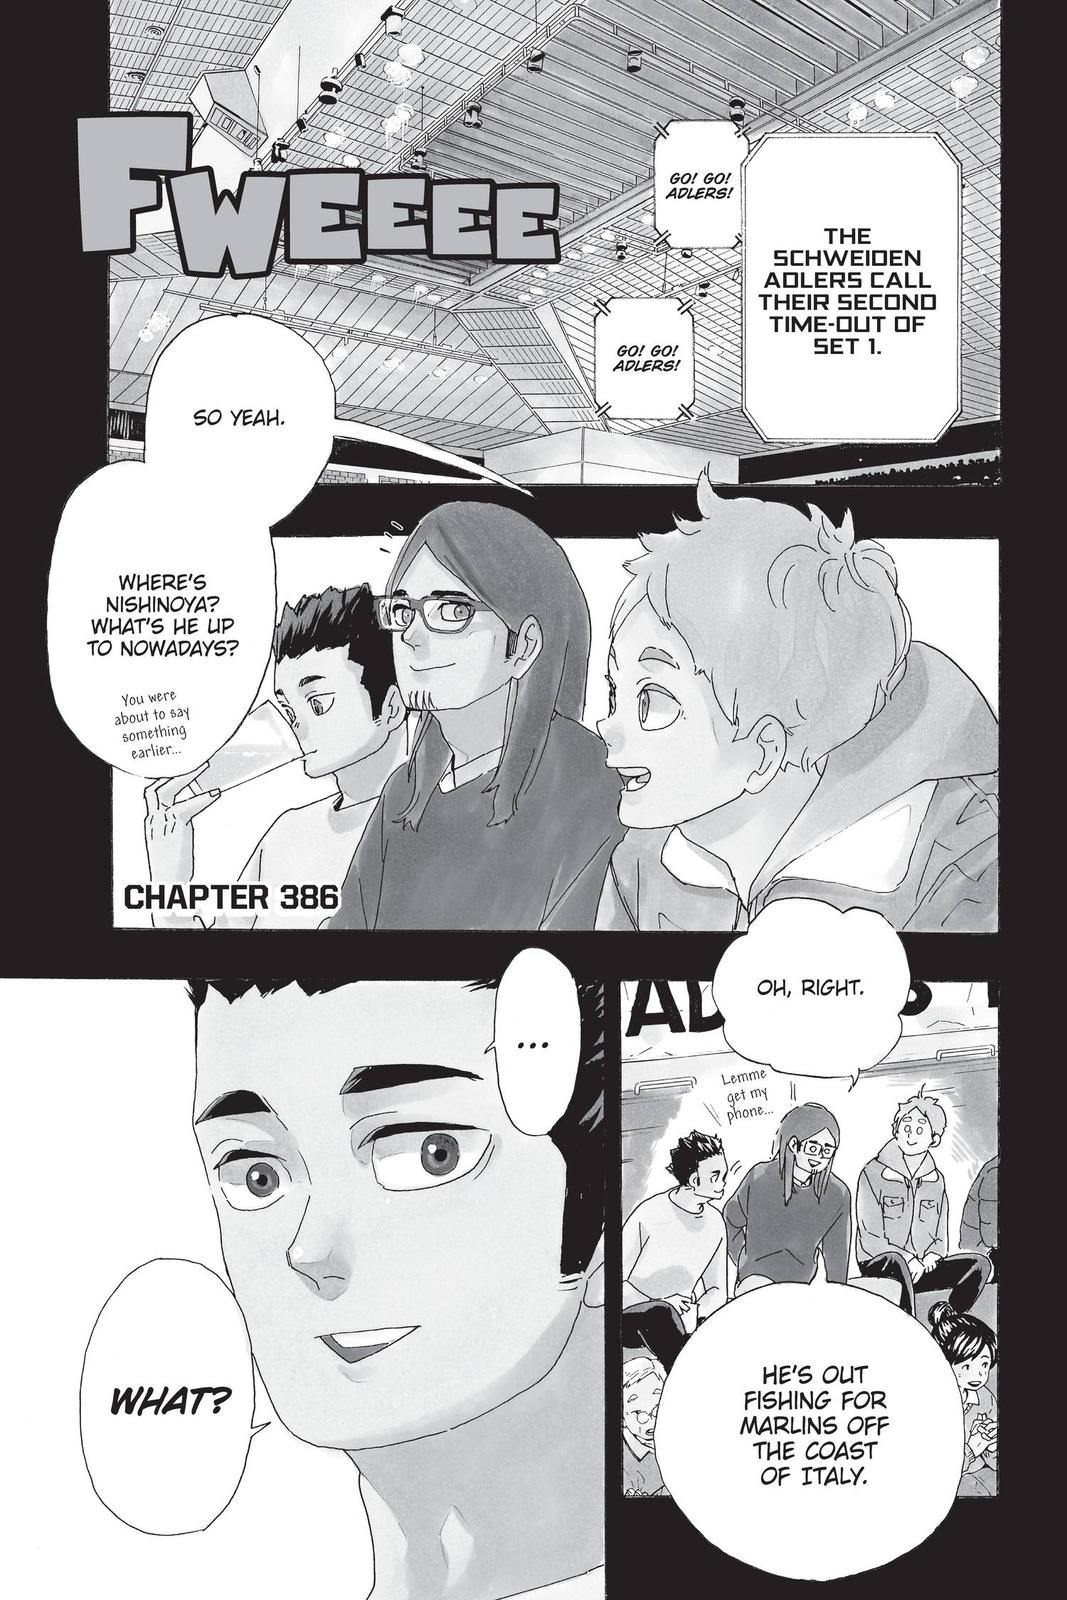 Haikyuu!!, Chapter 313 - To never give up is easier said than done - Haikyuu!!  Manga Online